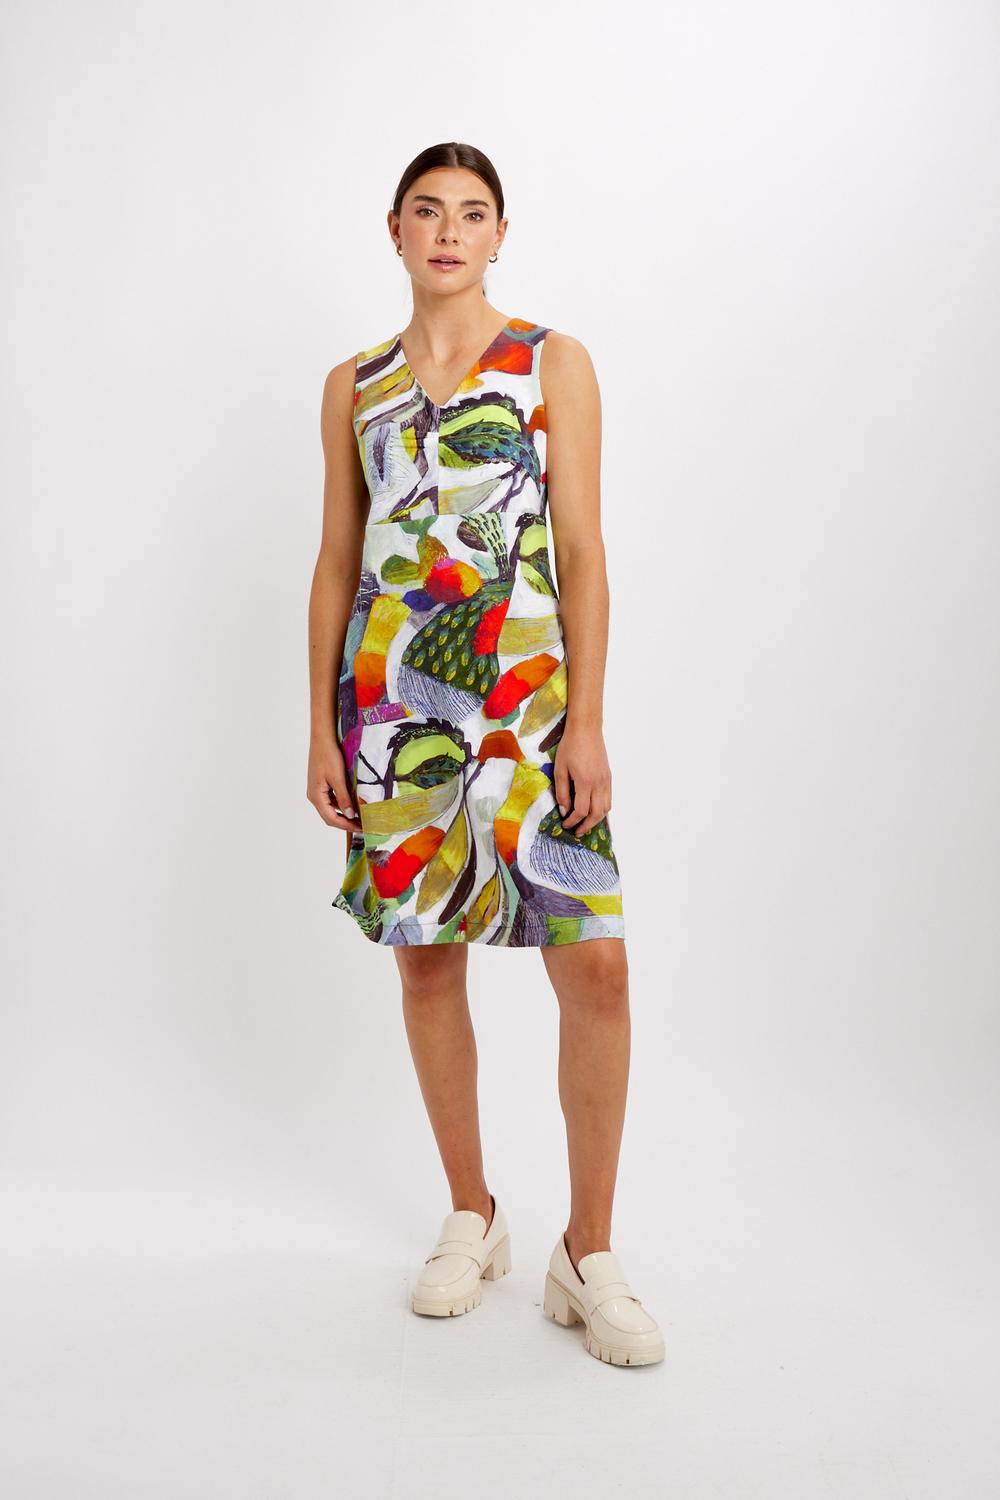 Sleeveless Abstract Mini Dress Style 24698. As Sample